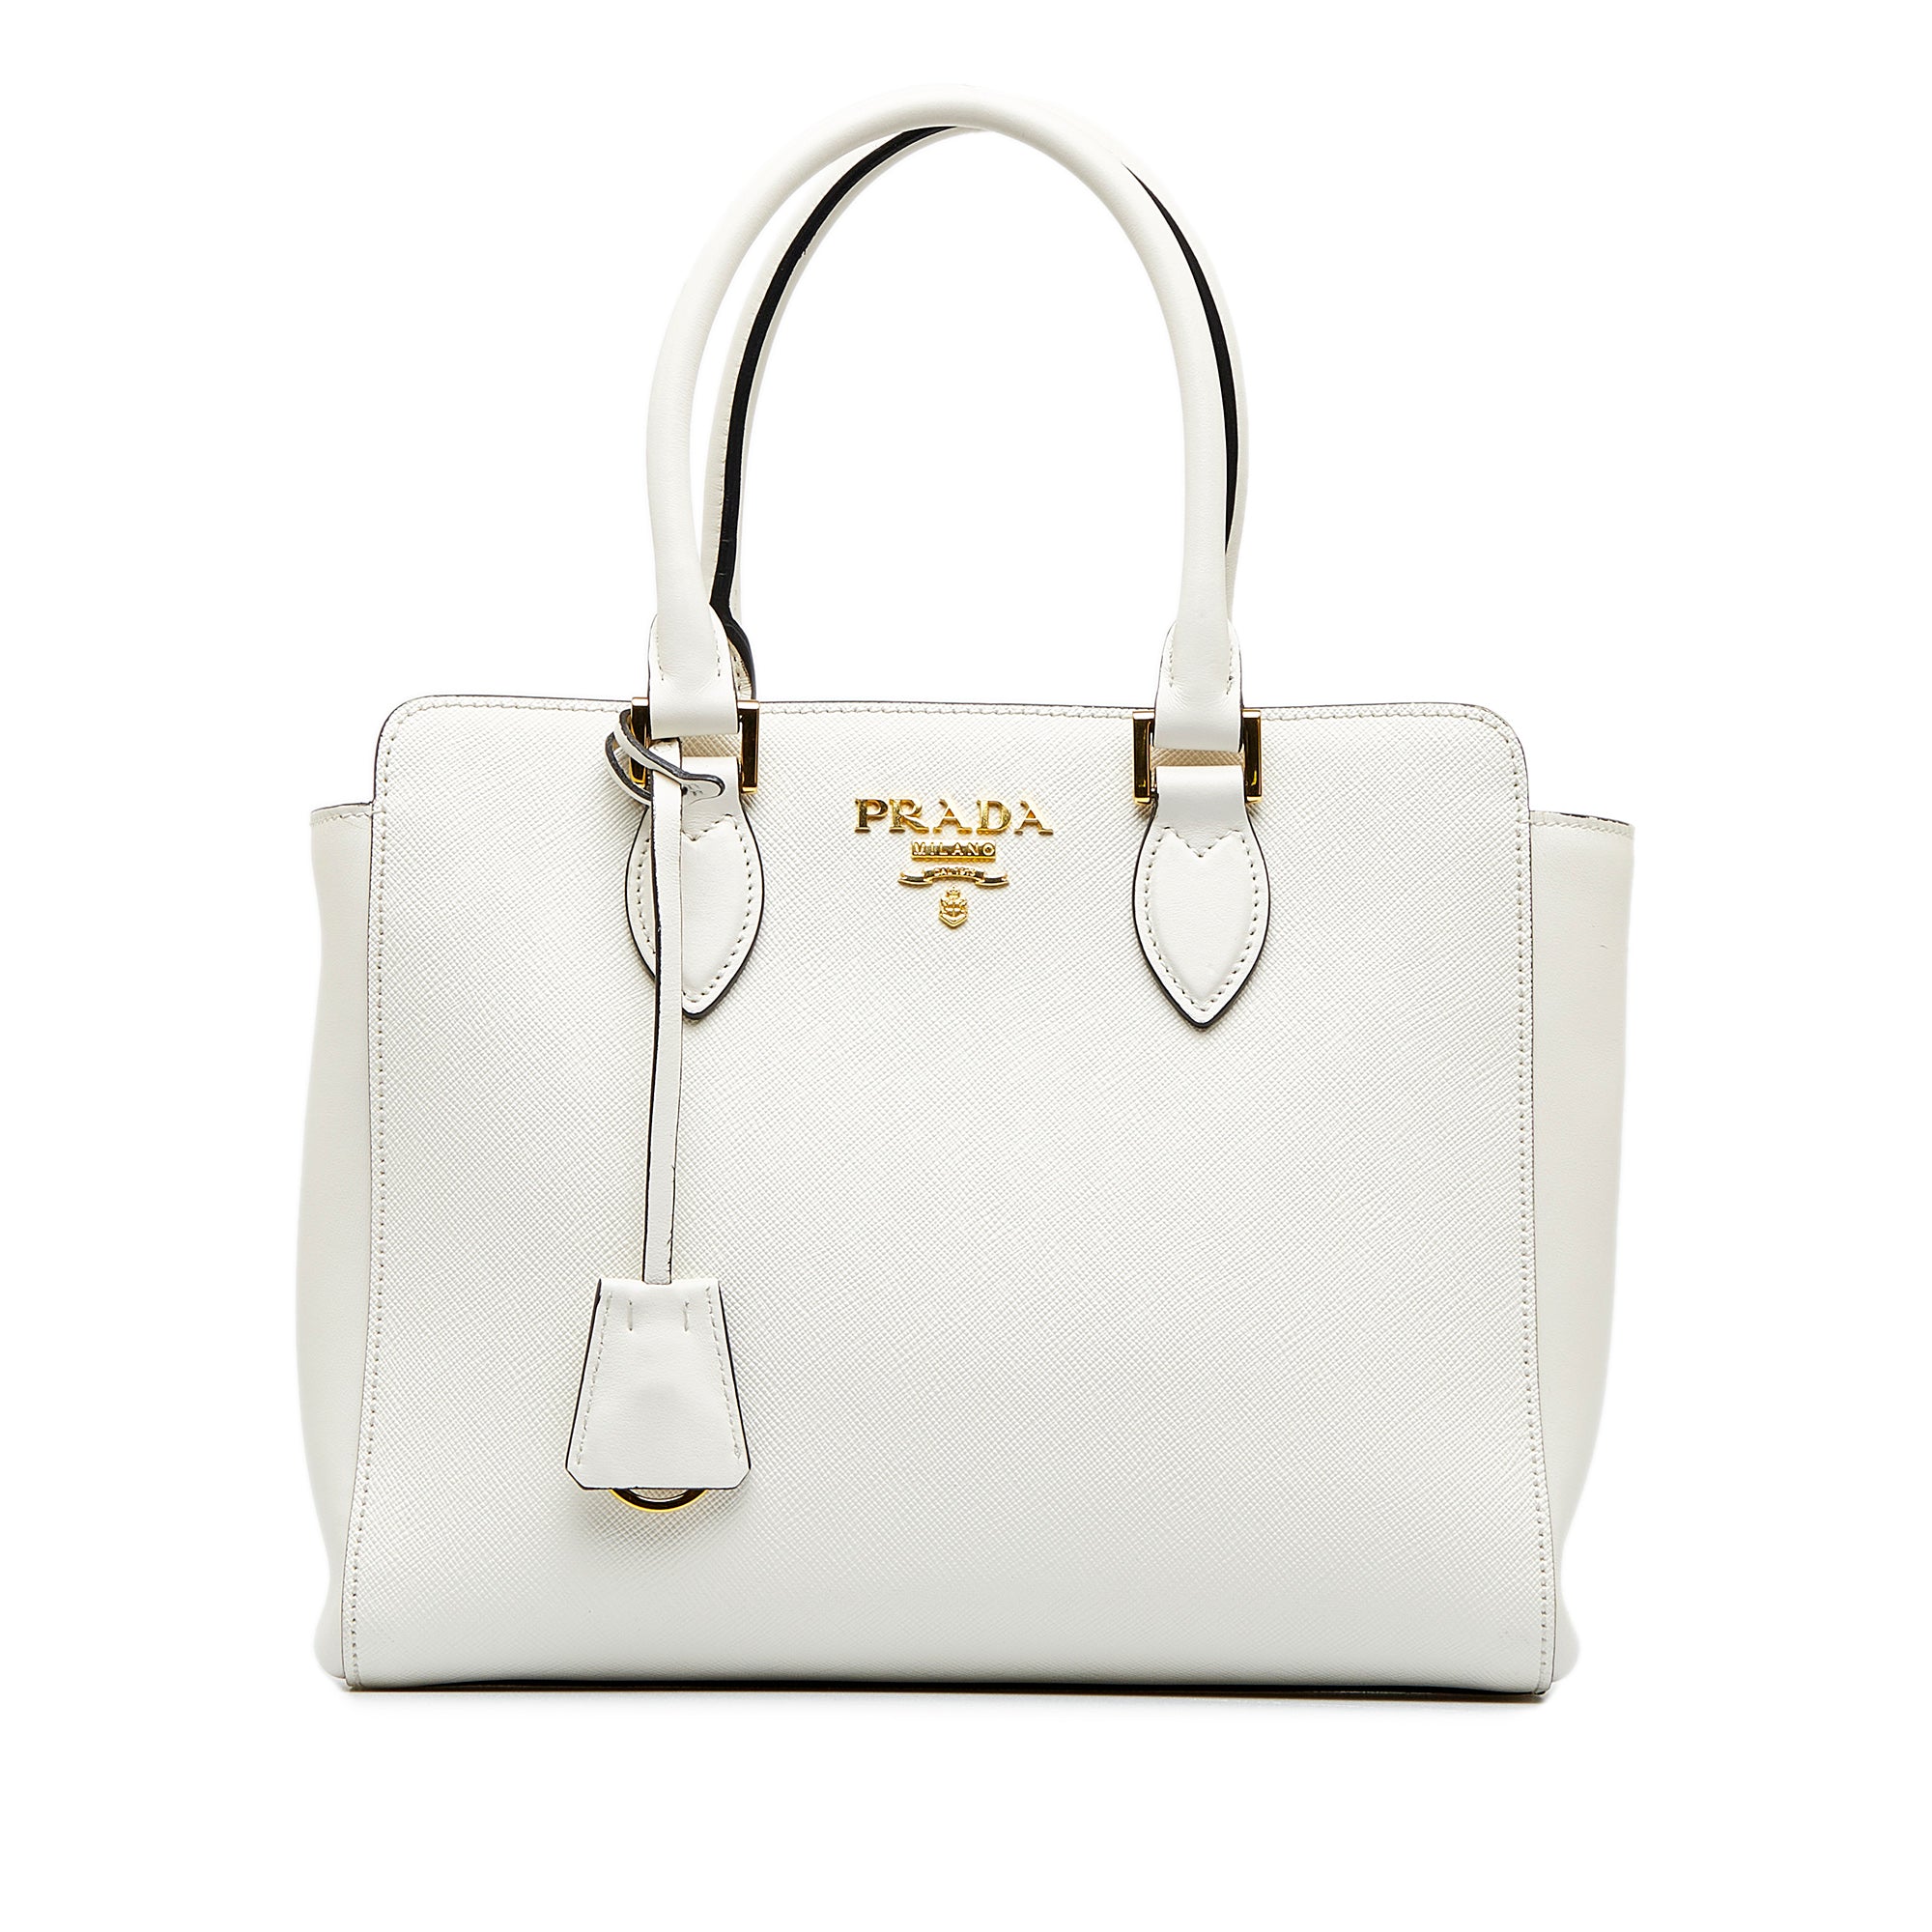 Prada Galleria Saffiano Leather Large Bag In White